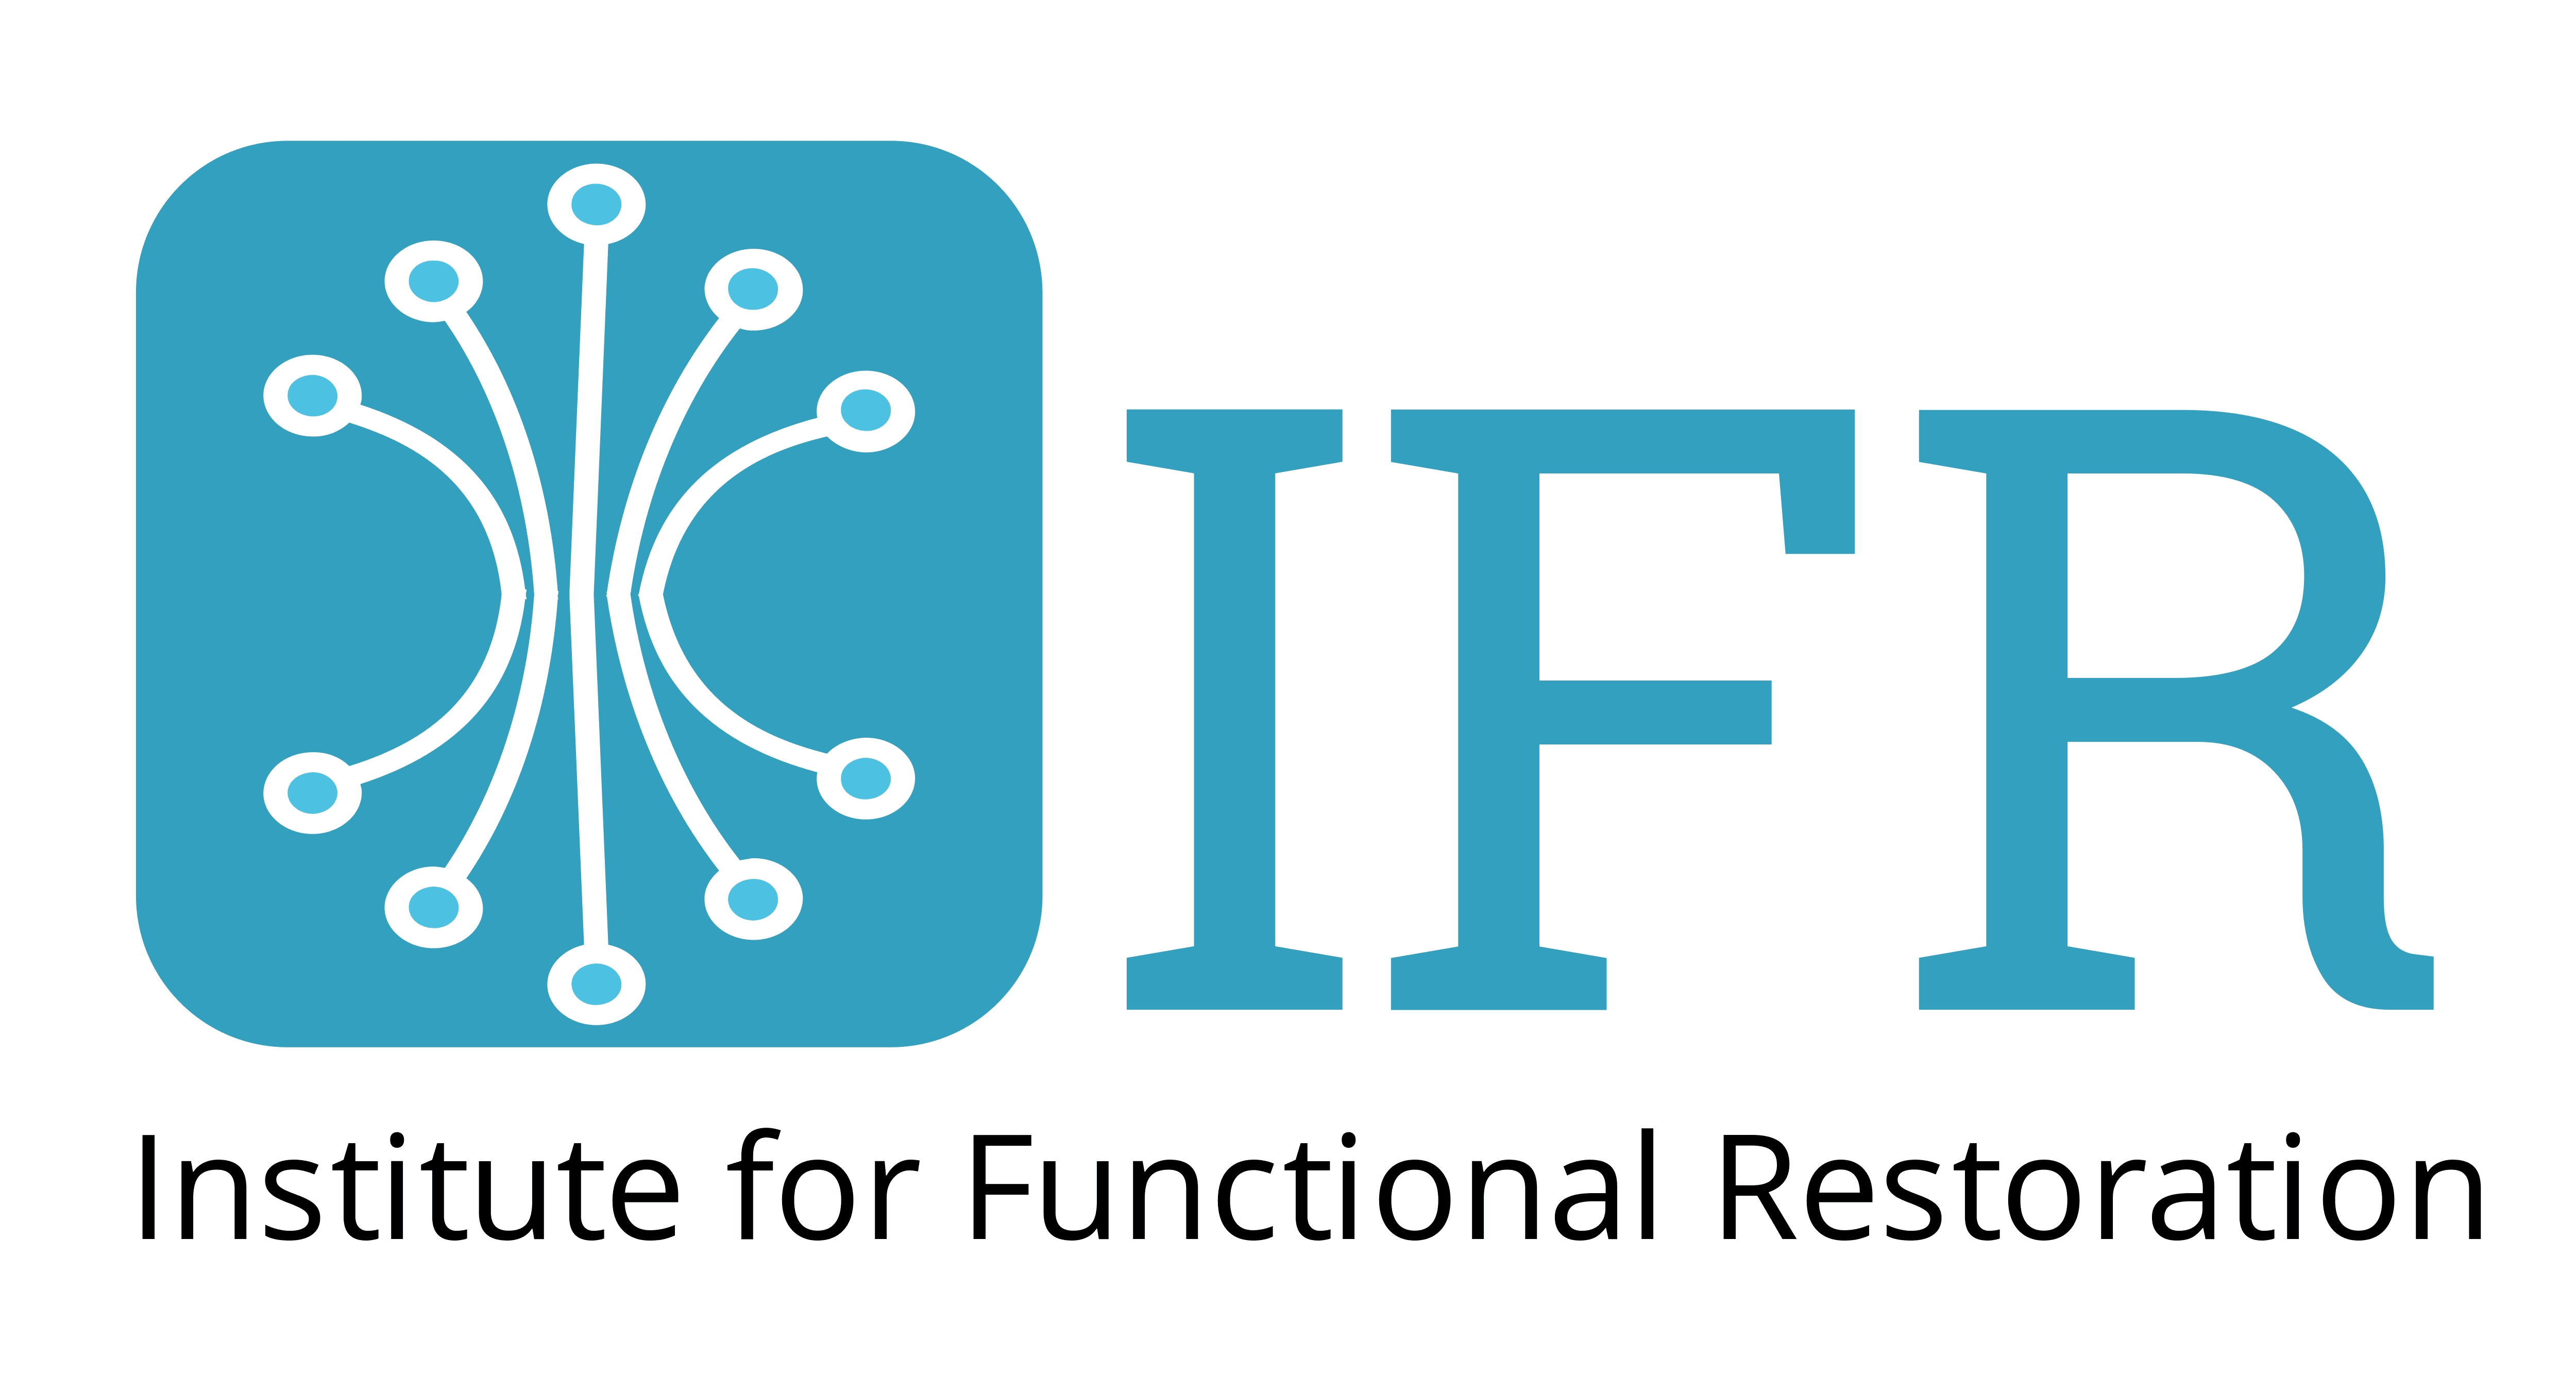 Institute for Functional Restoration